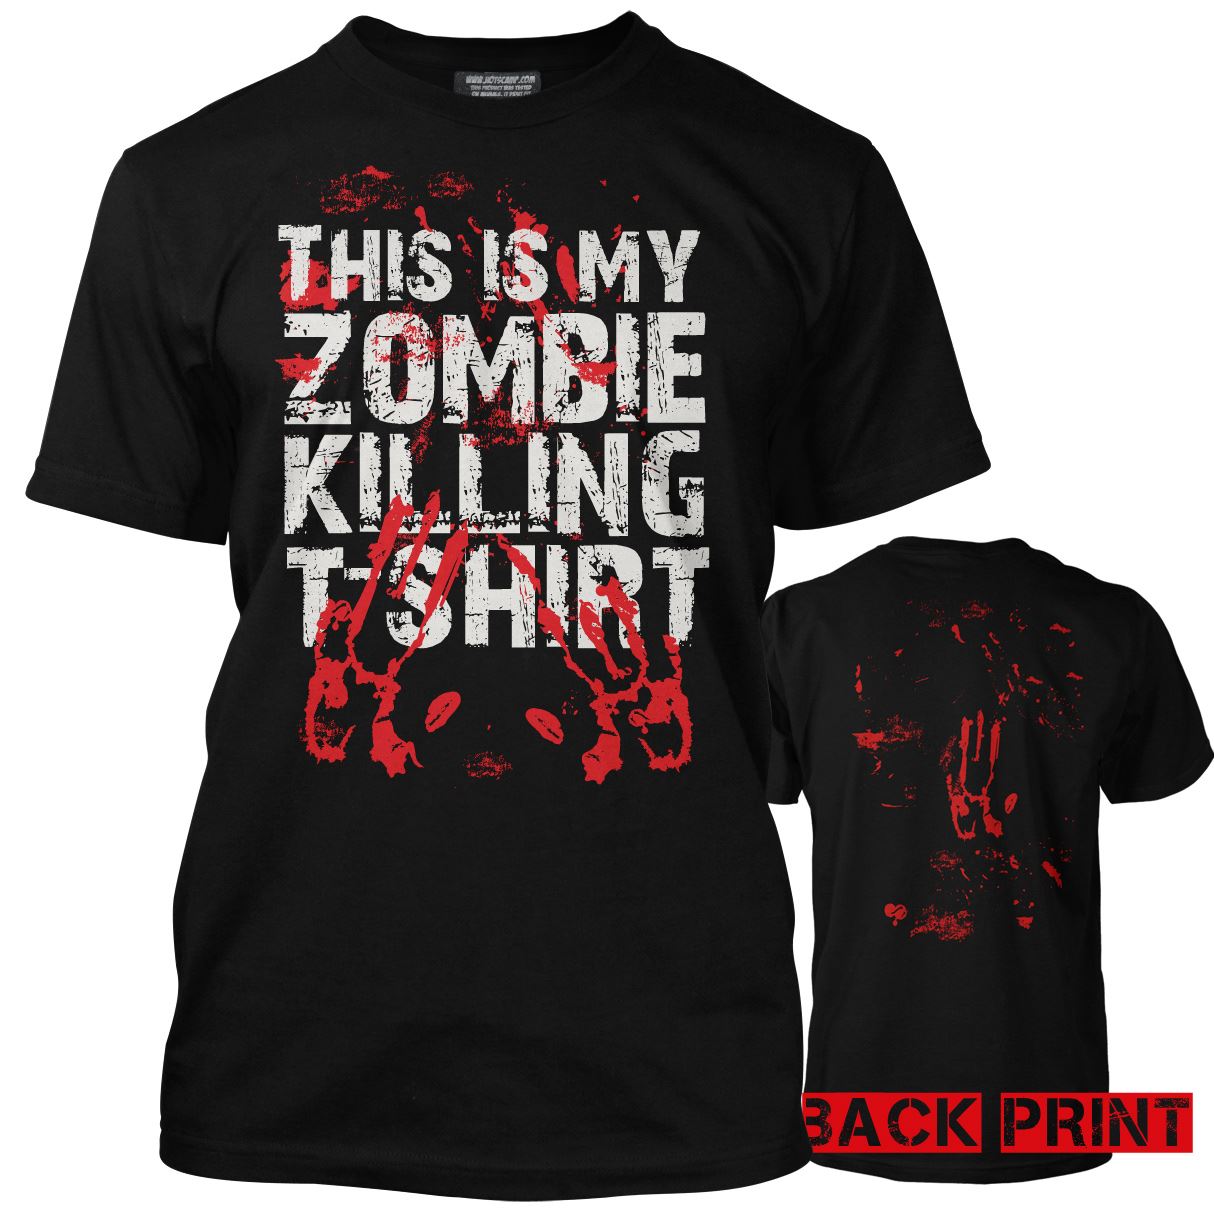 This is My Zombie Killing T-Shirt - Kids T-Shirt